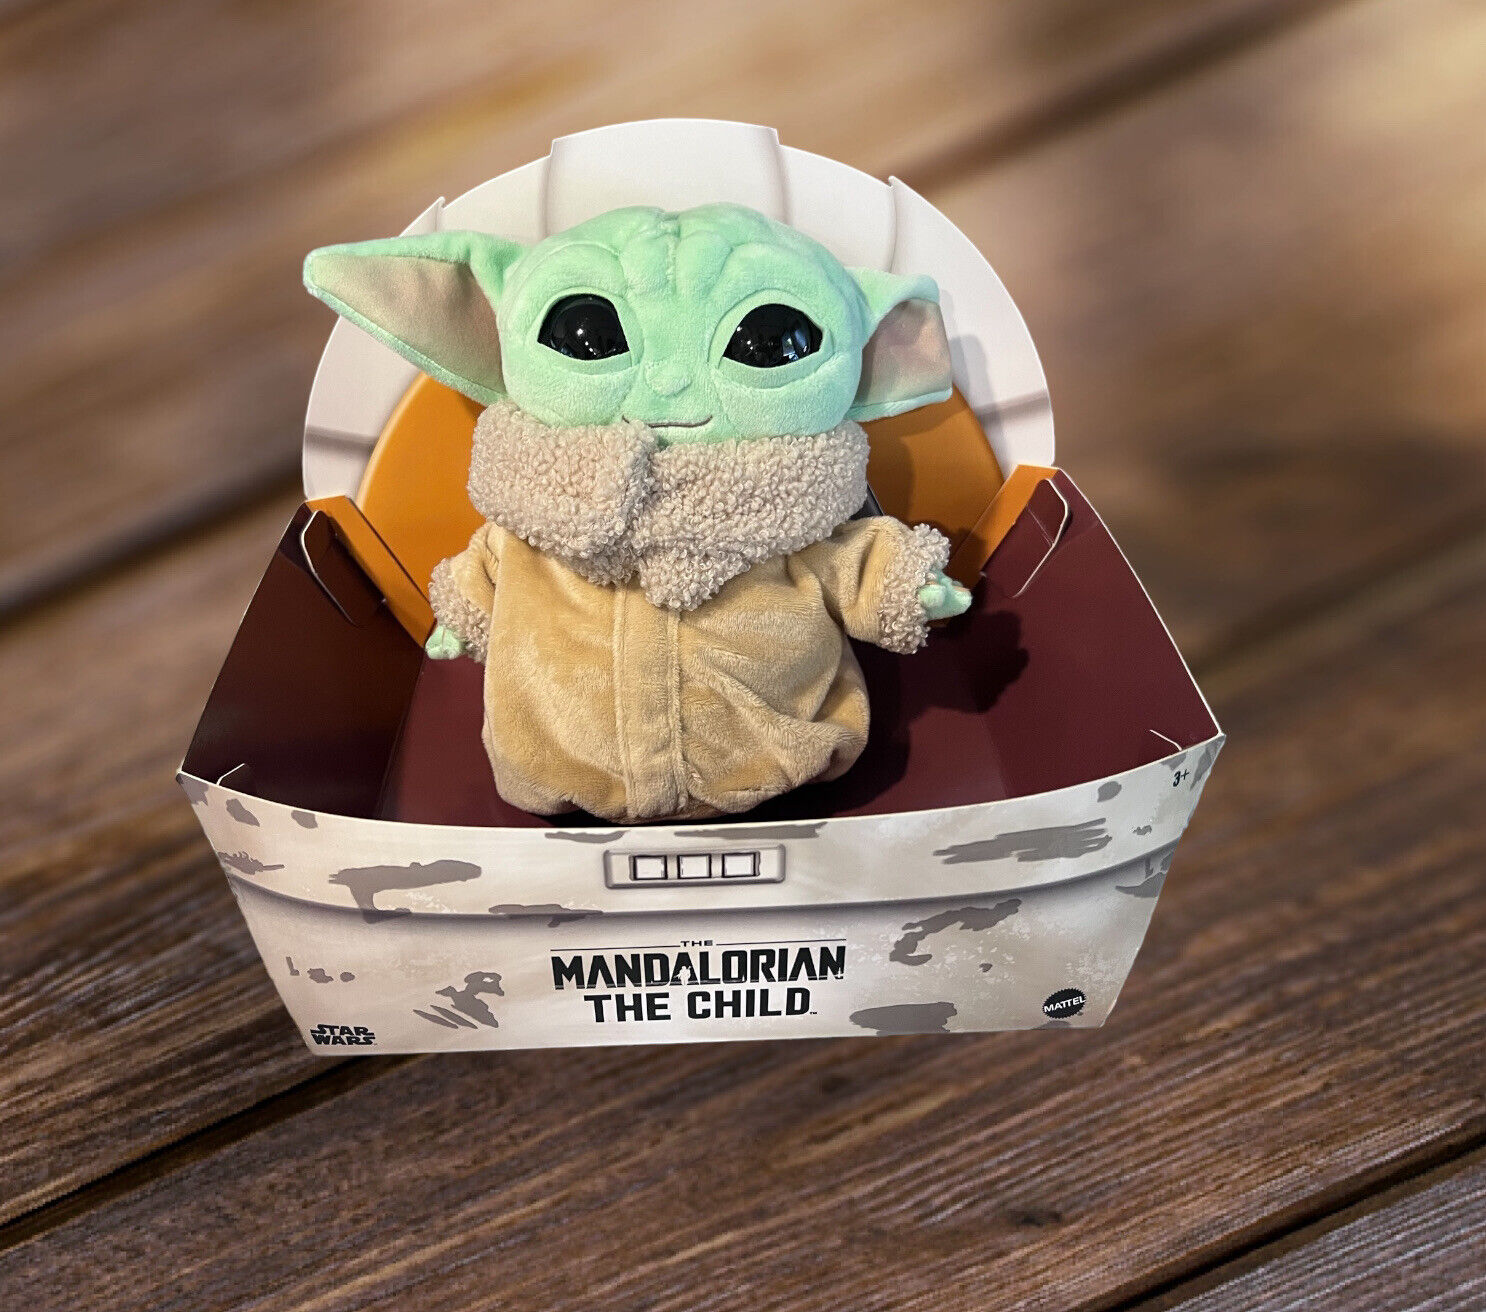 Star Wars Baby Yoda Grogu Plush Doll Toy The Child 8” Mandalorian Mattel Cute